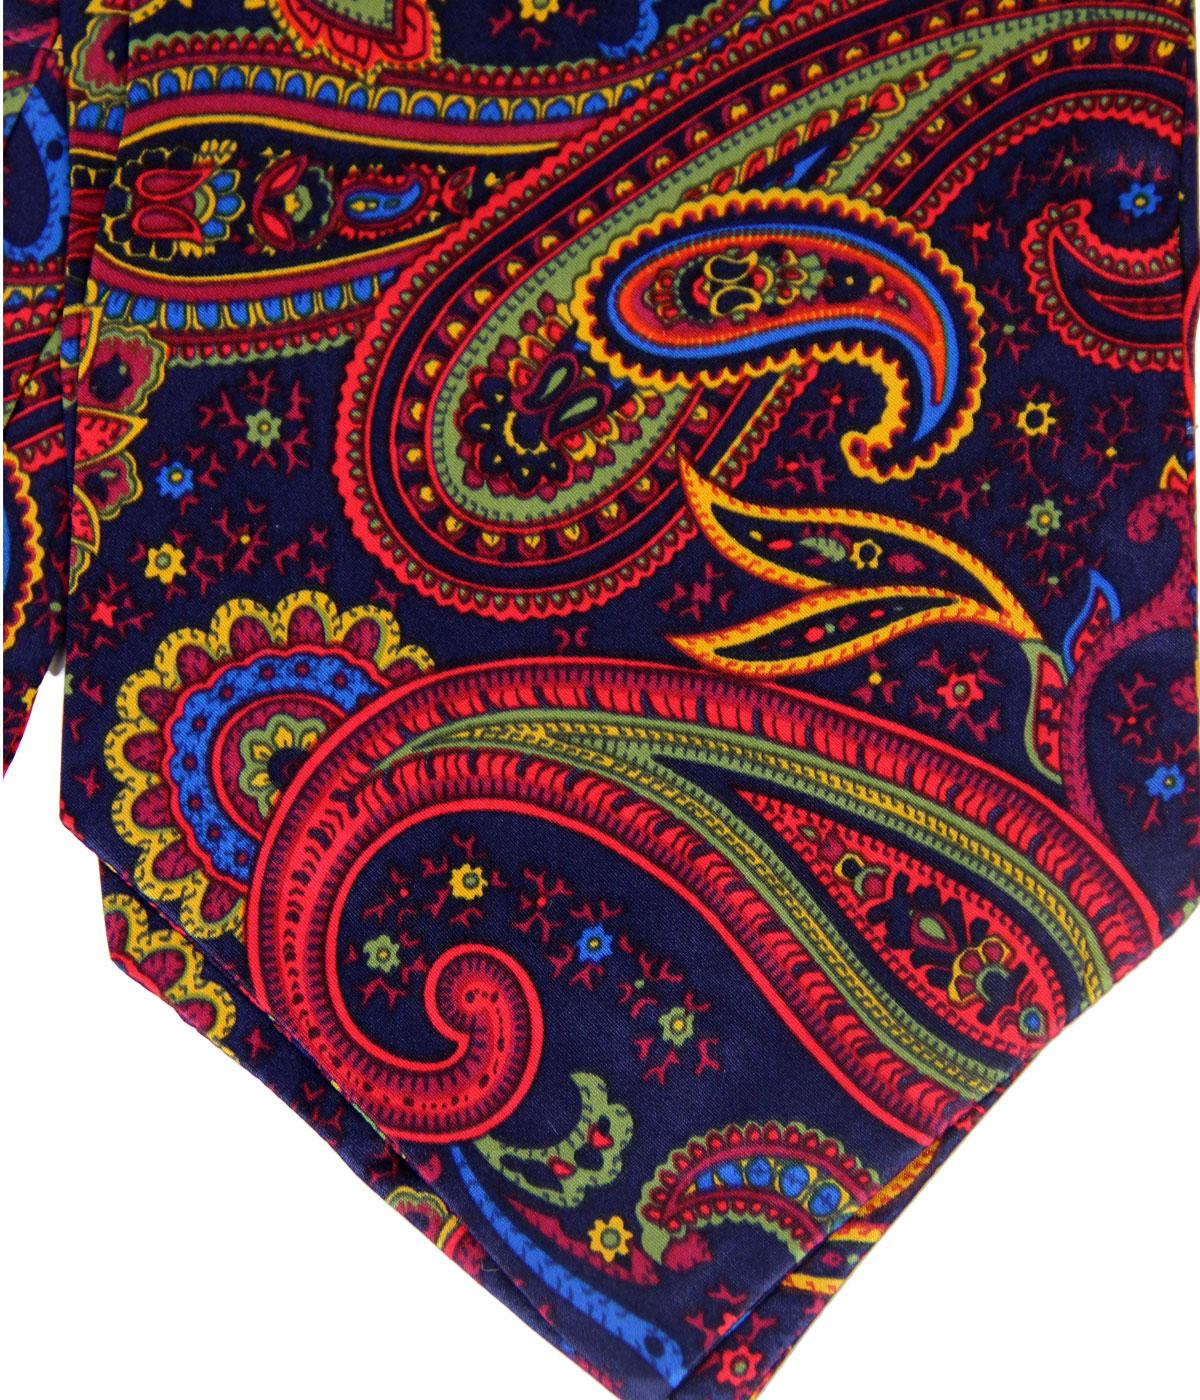 TOOTAL Retro 1960s Mod Bright Paisley Silk Cravat in Navy